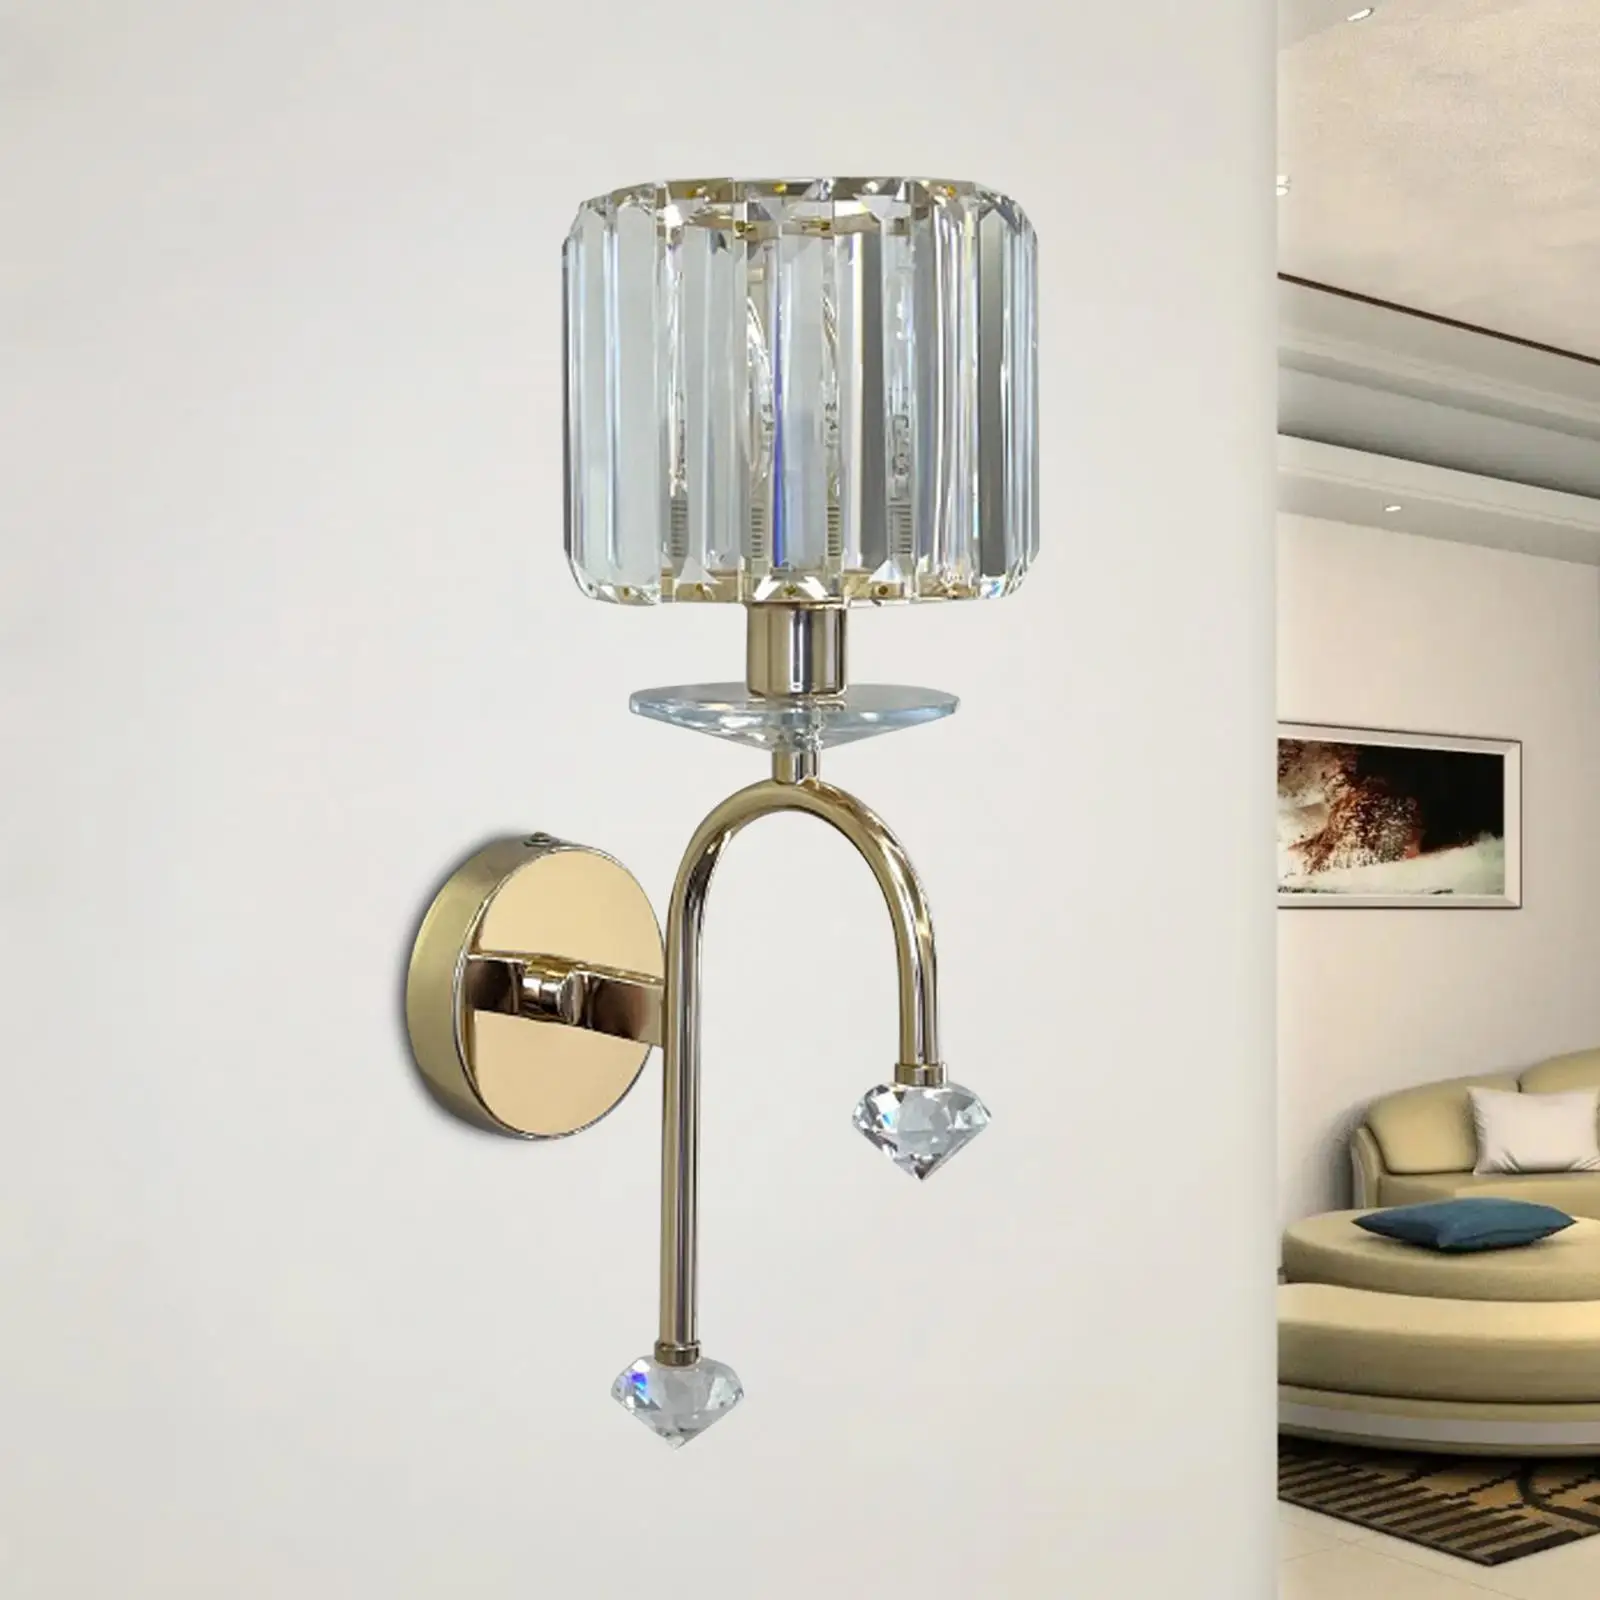 Wall Sconce Lampshade Indoor NightStand Bedside Decor Wall Mount Lamp Shade Modern for Hallway Loft Bathroom Bedroom Study